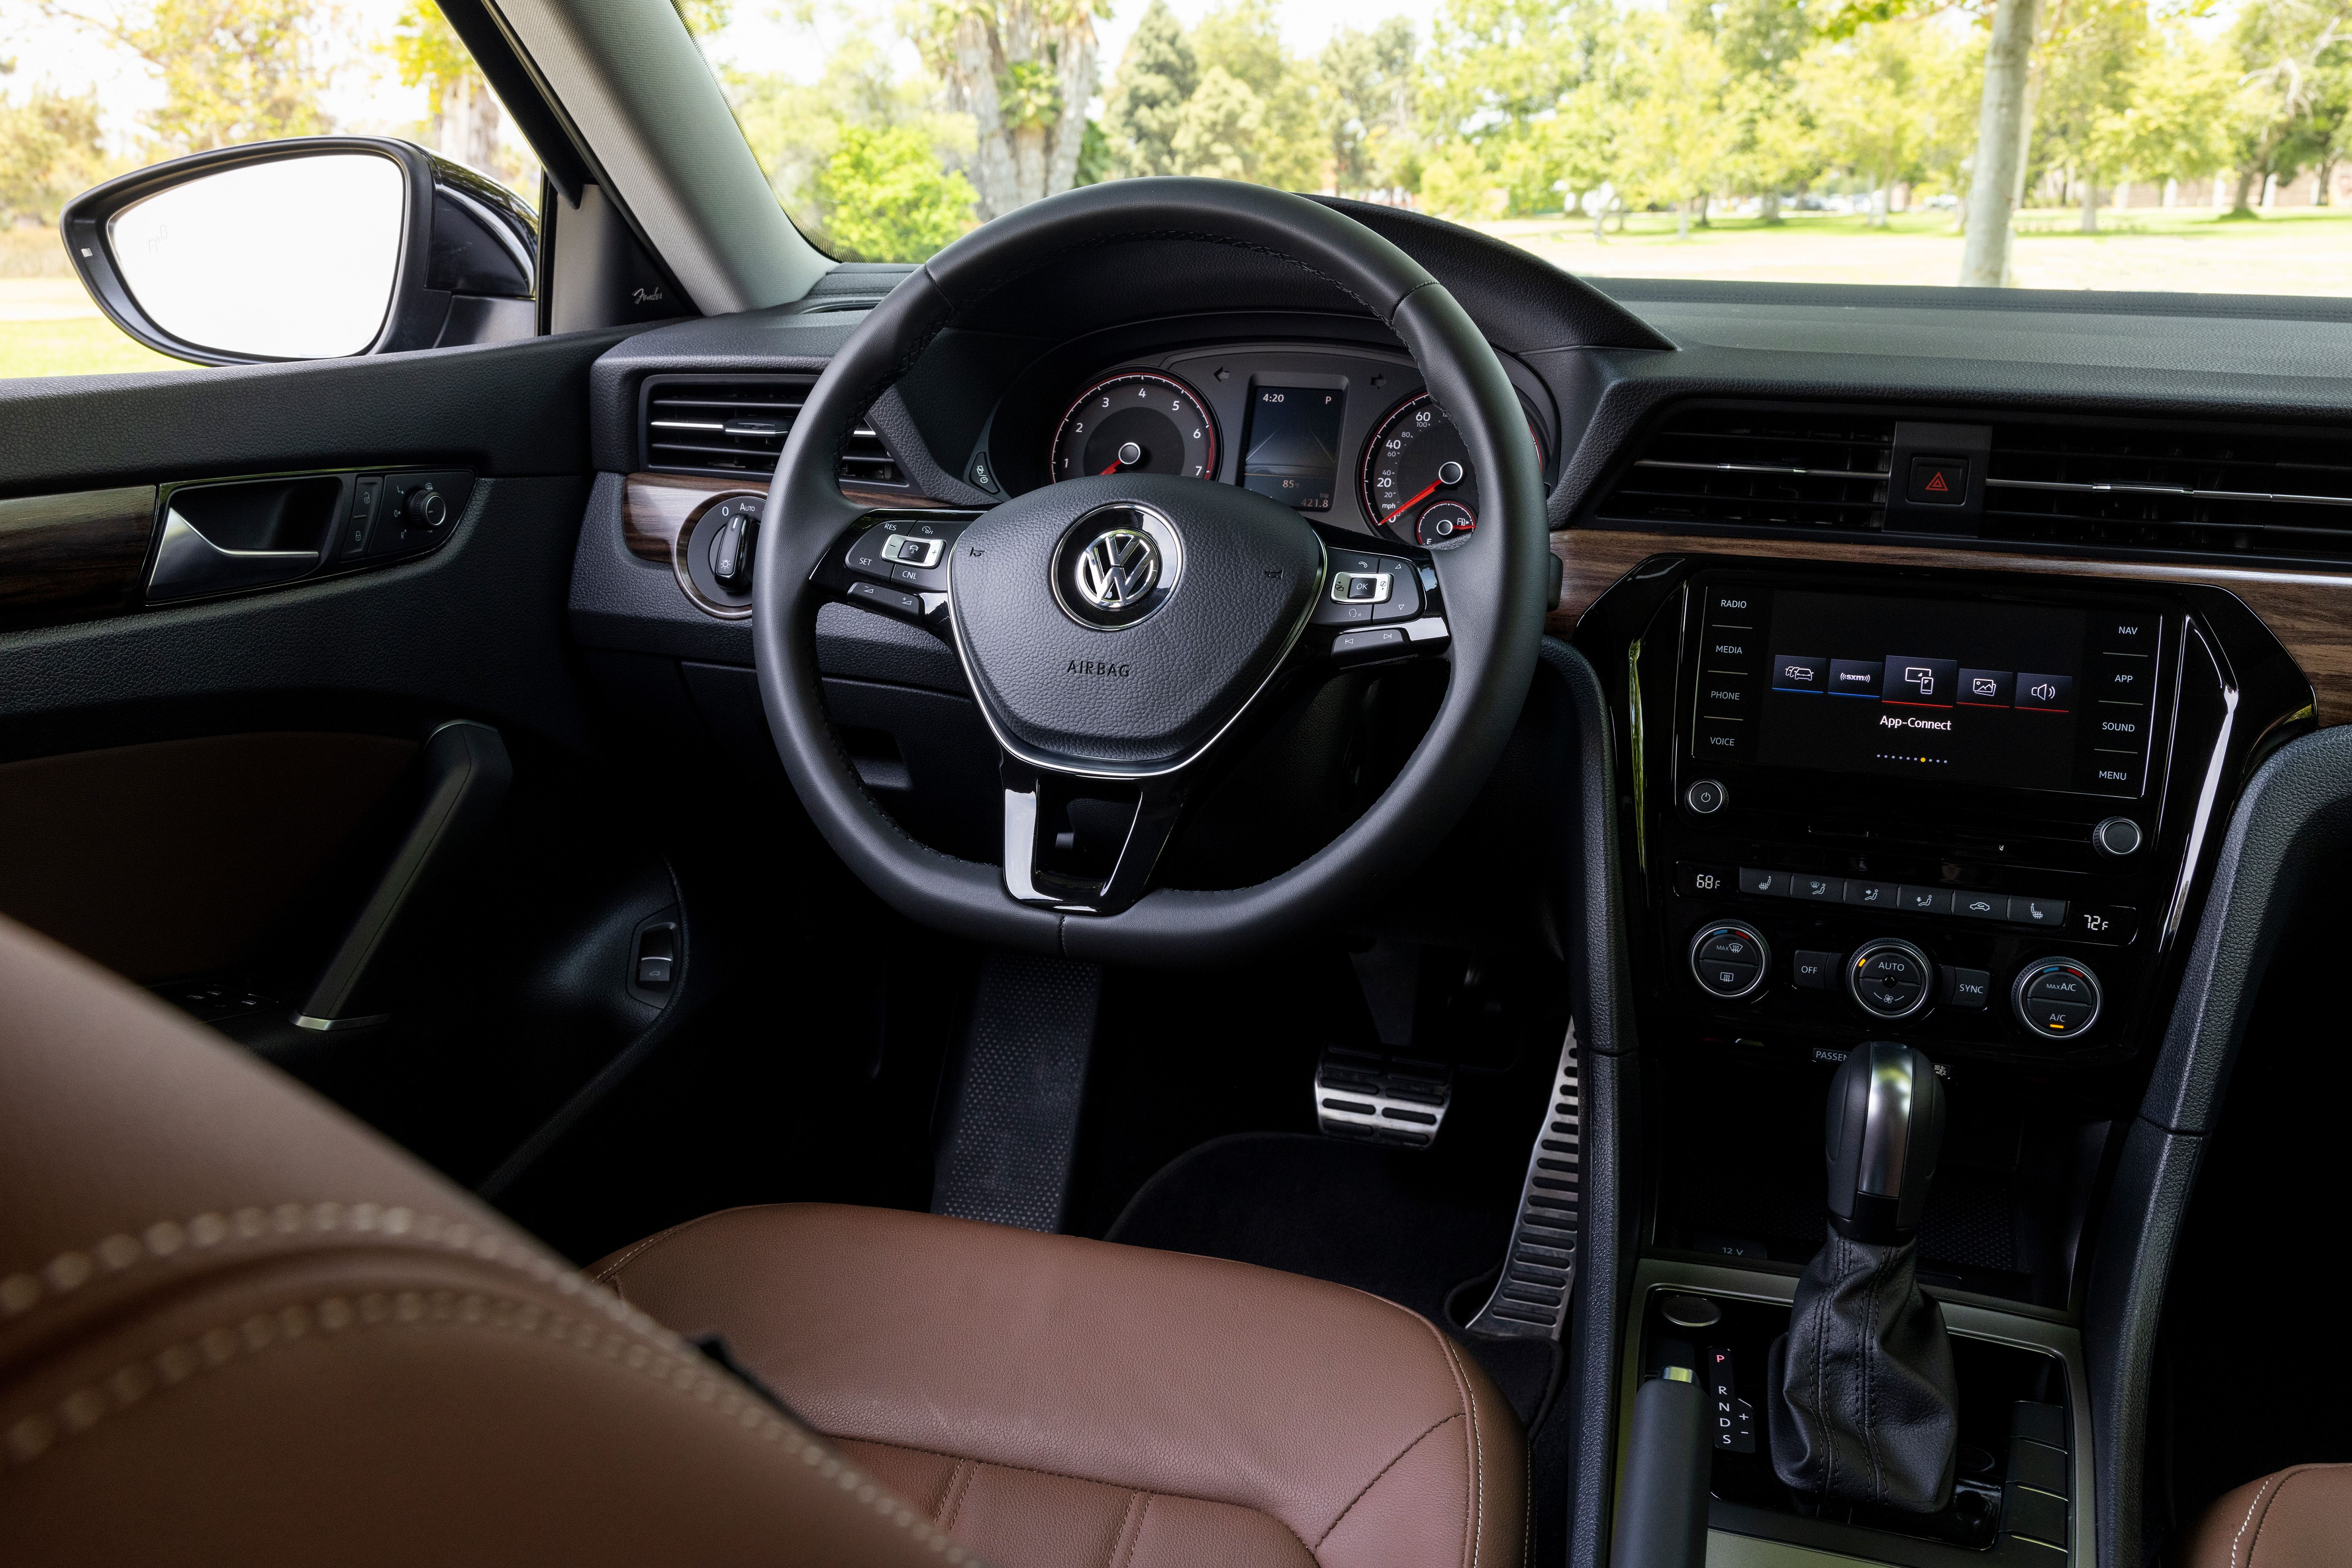 Volkswagen Passat B6 2.0 TFSI specs, dimensions